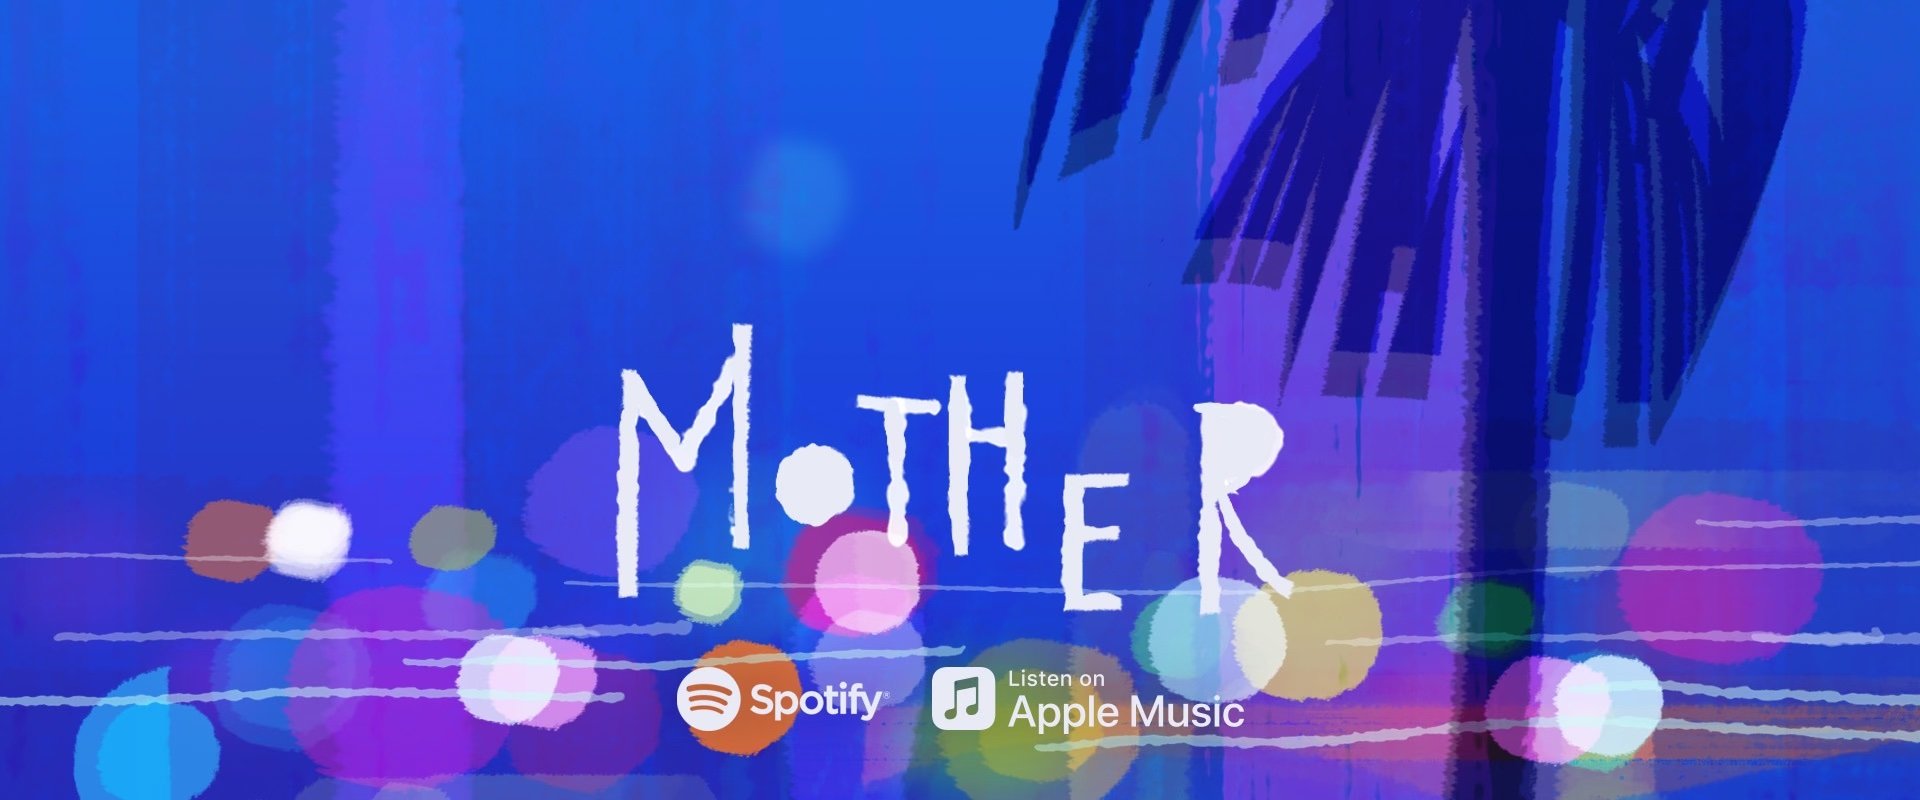 Mother-web.jpg